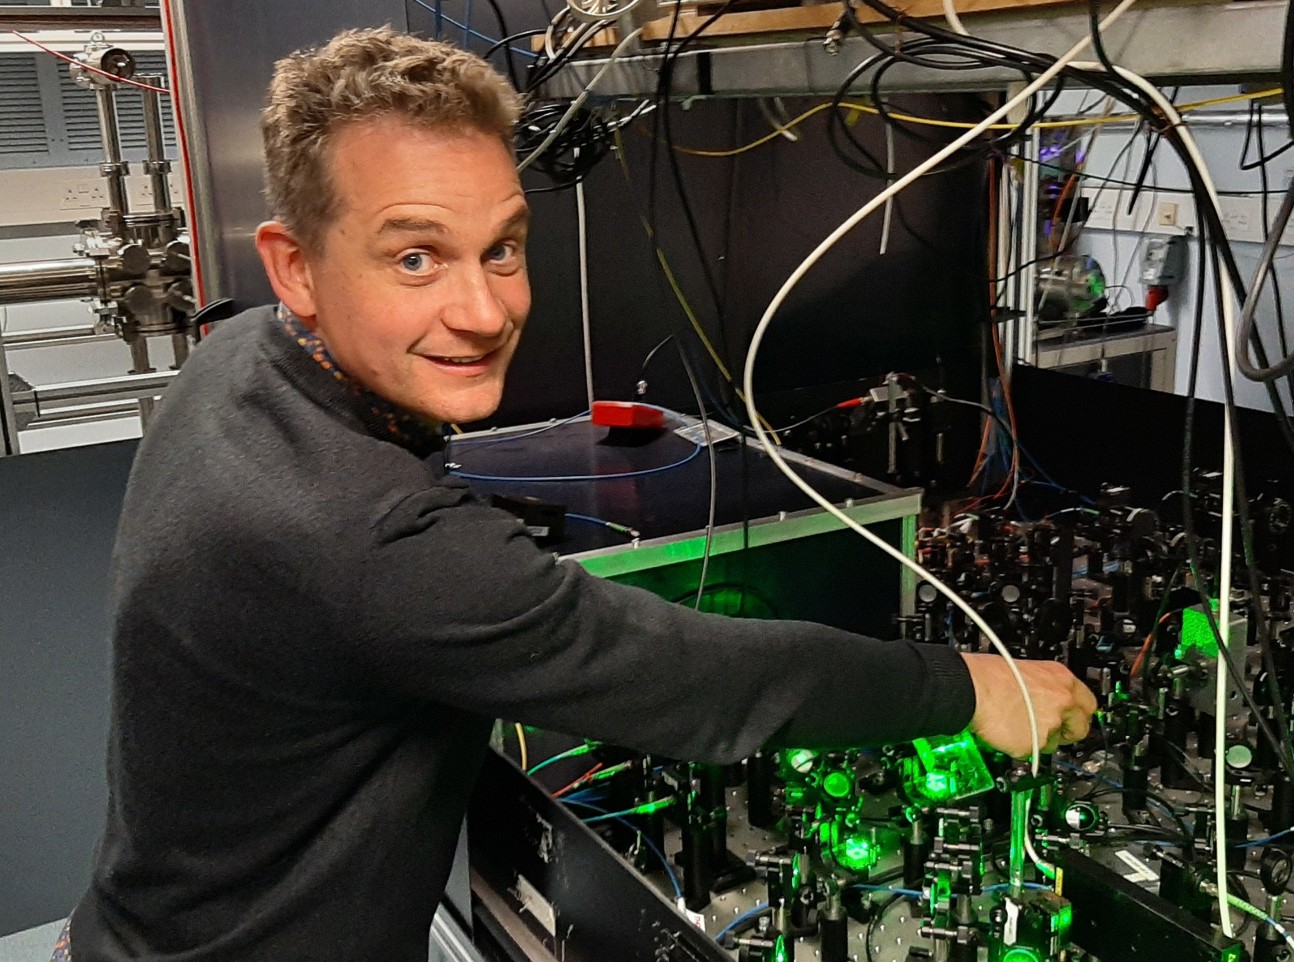 Professor Tarbutt adjusts some laser equipment